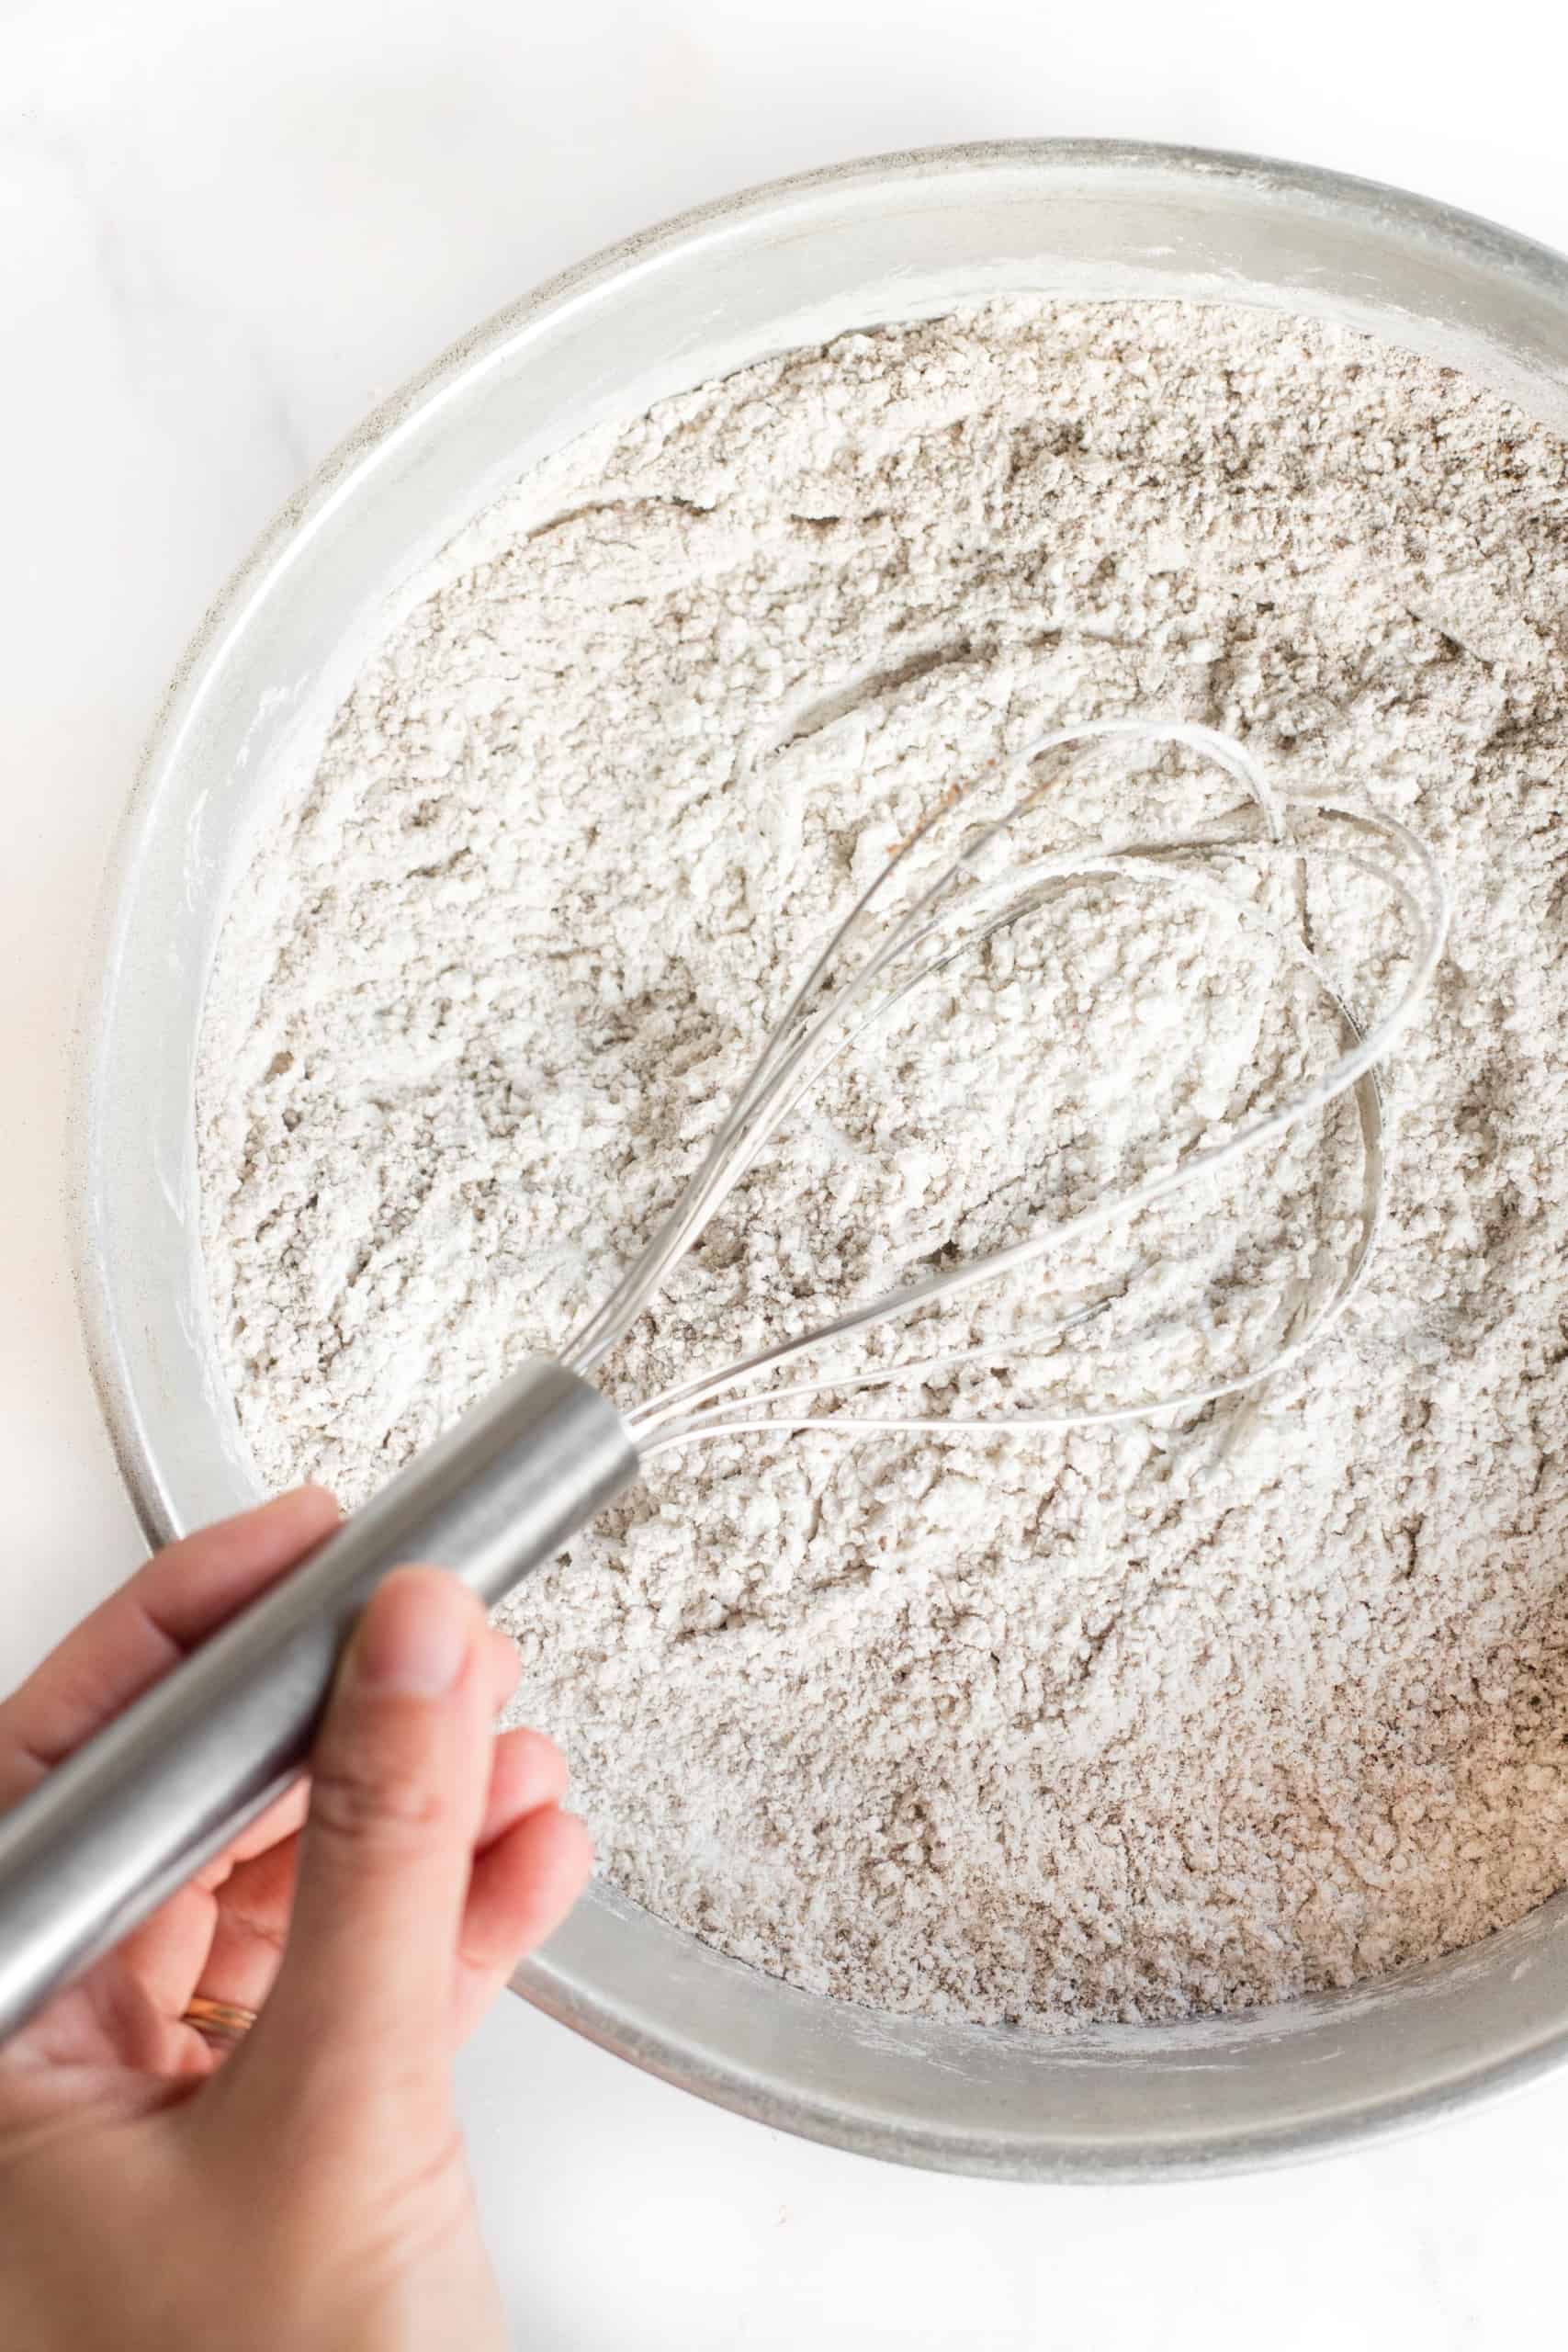 Whisking flour mixture in a large metal bowl.